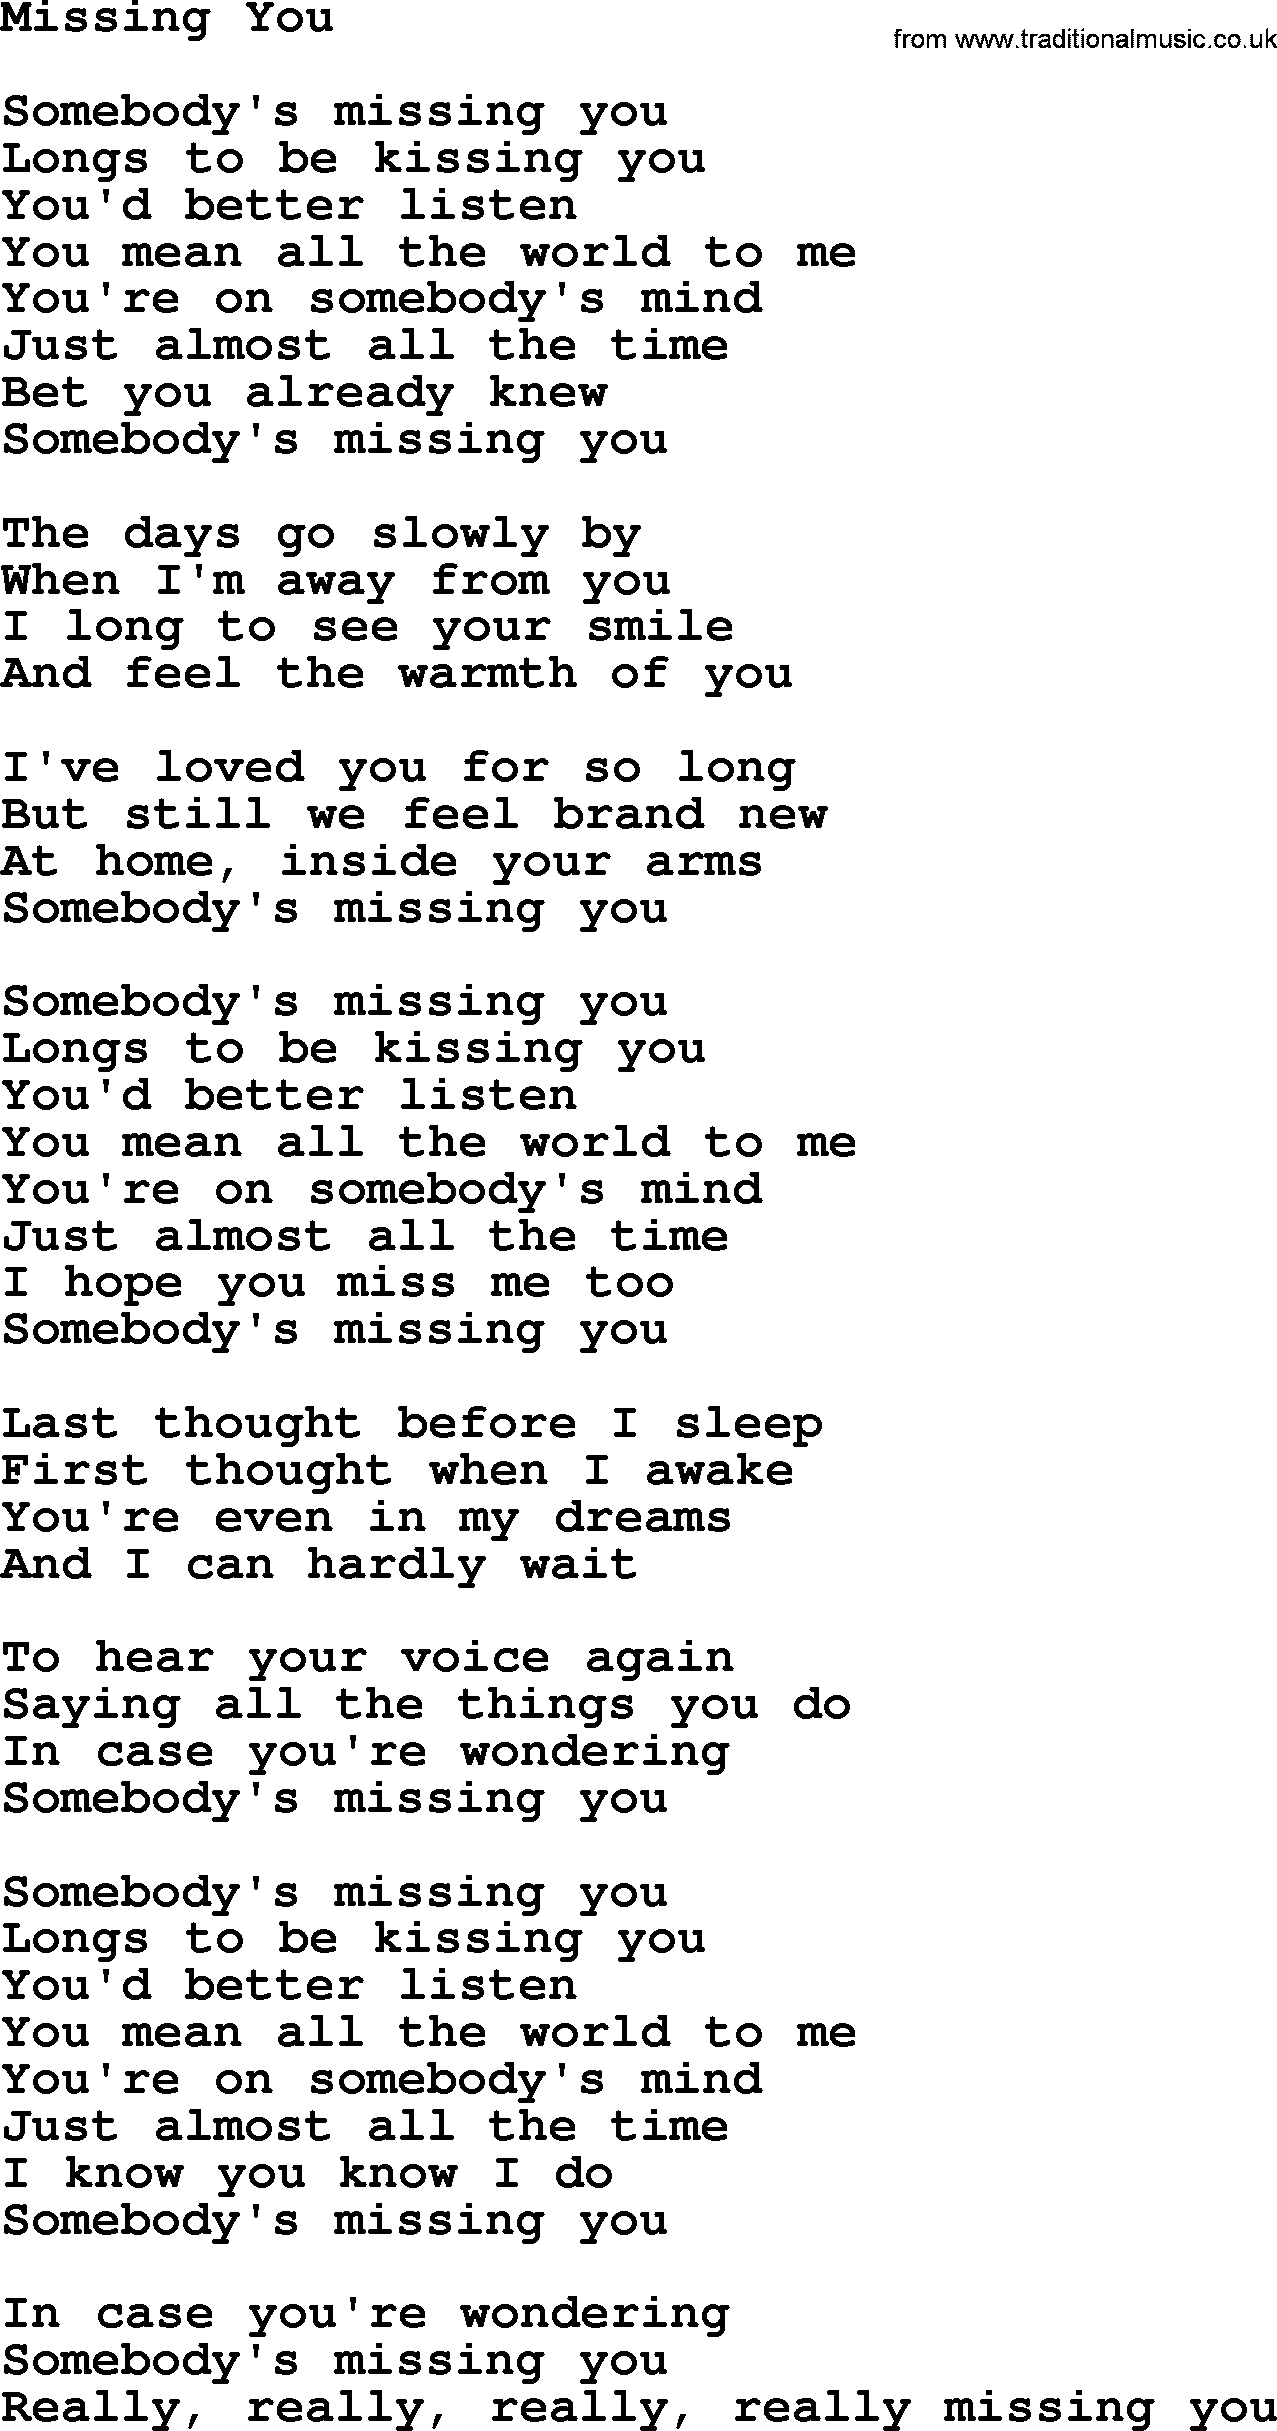 Dolly Parton song Missing You.txt lyrics